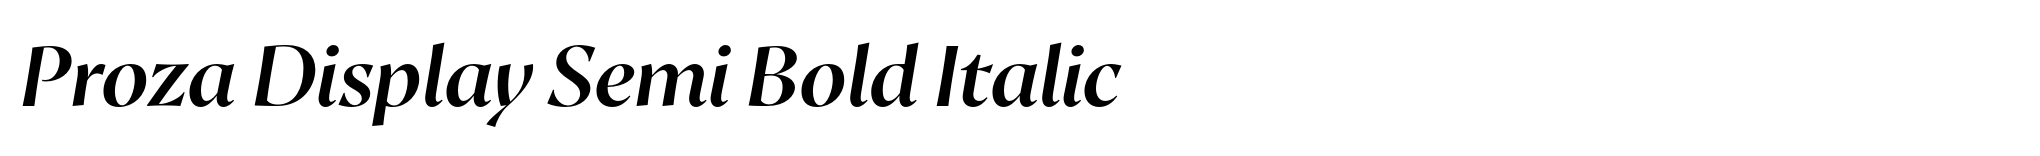 Proza Display Semi Bold Italic image